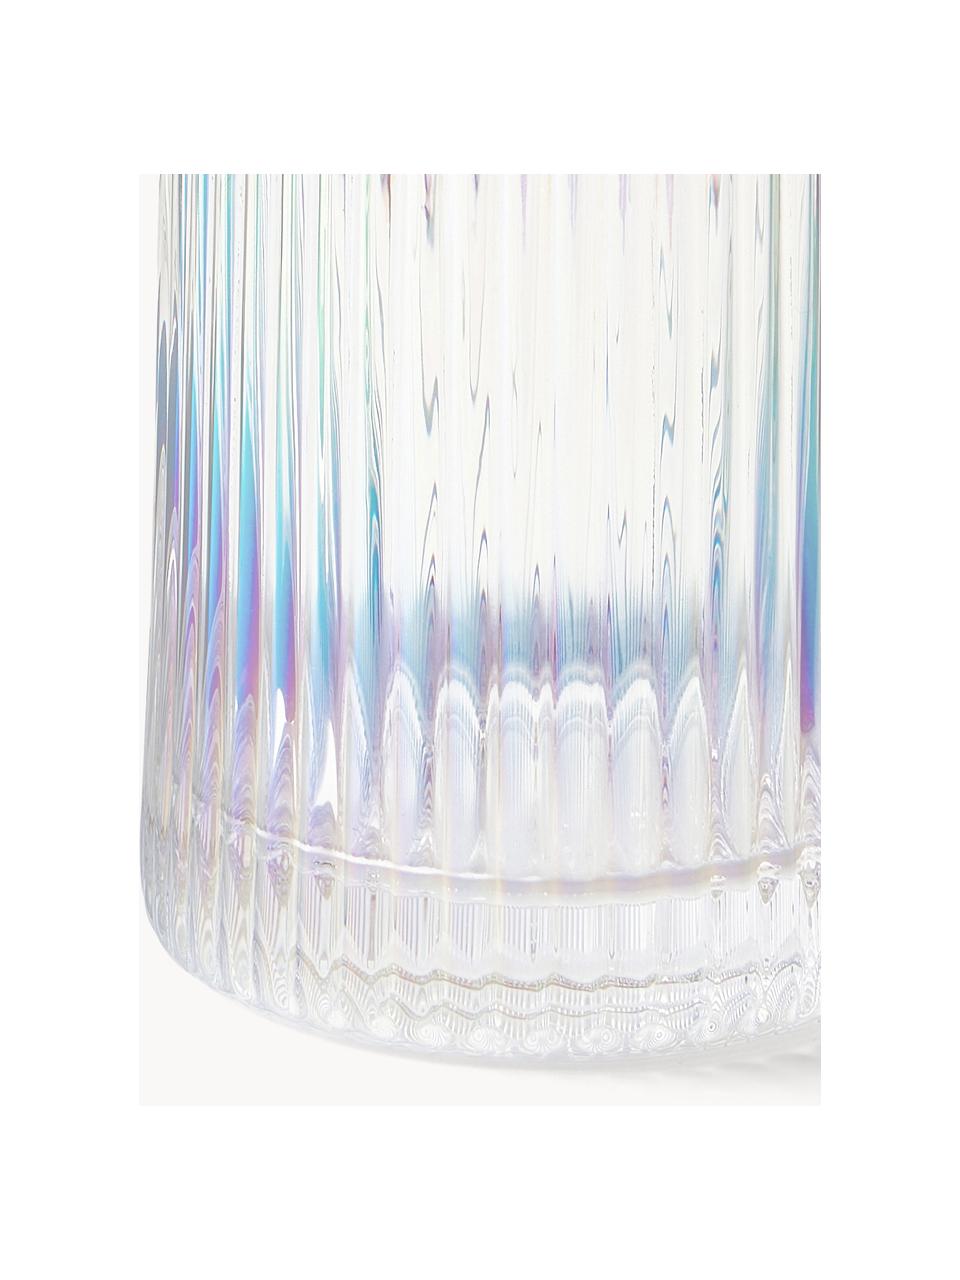 Carafe à eau en verre irisé et strié Minna de Guglielmo Scilla, 1